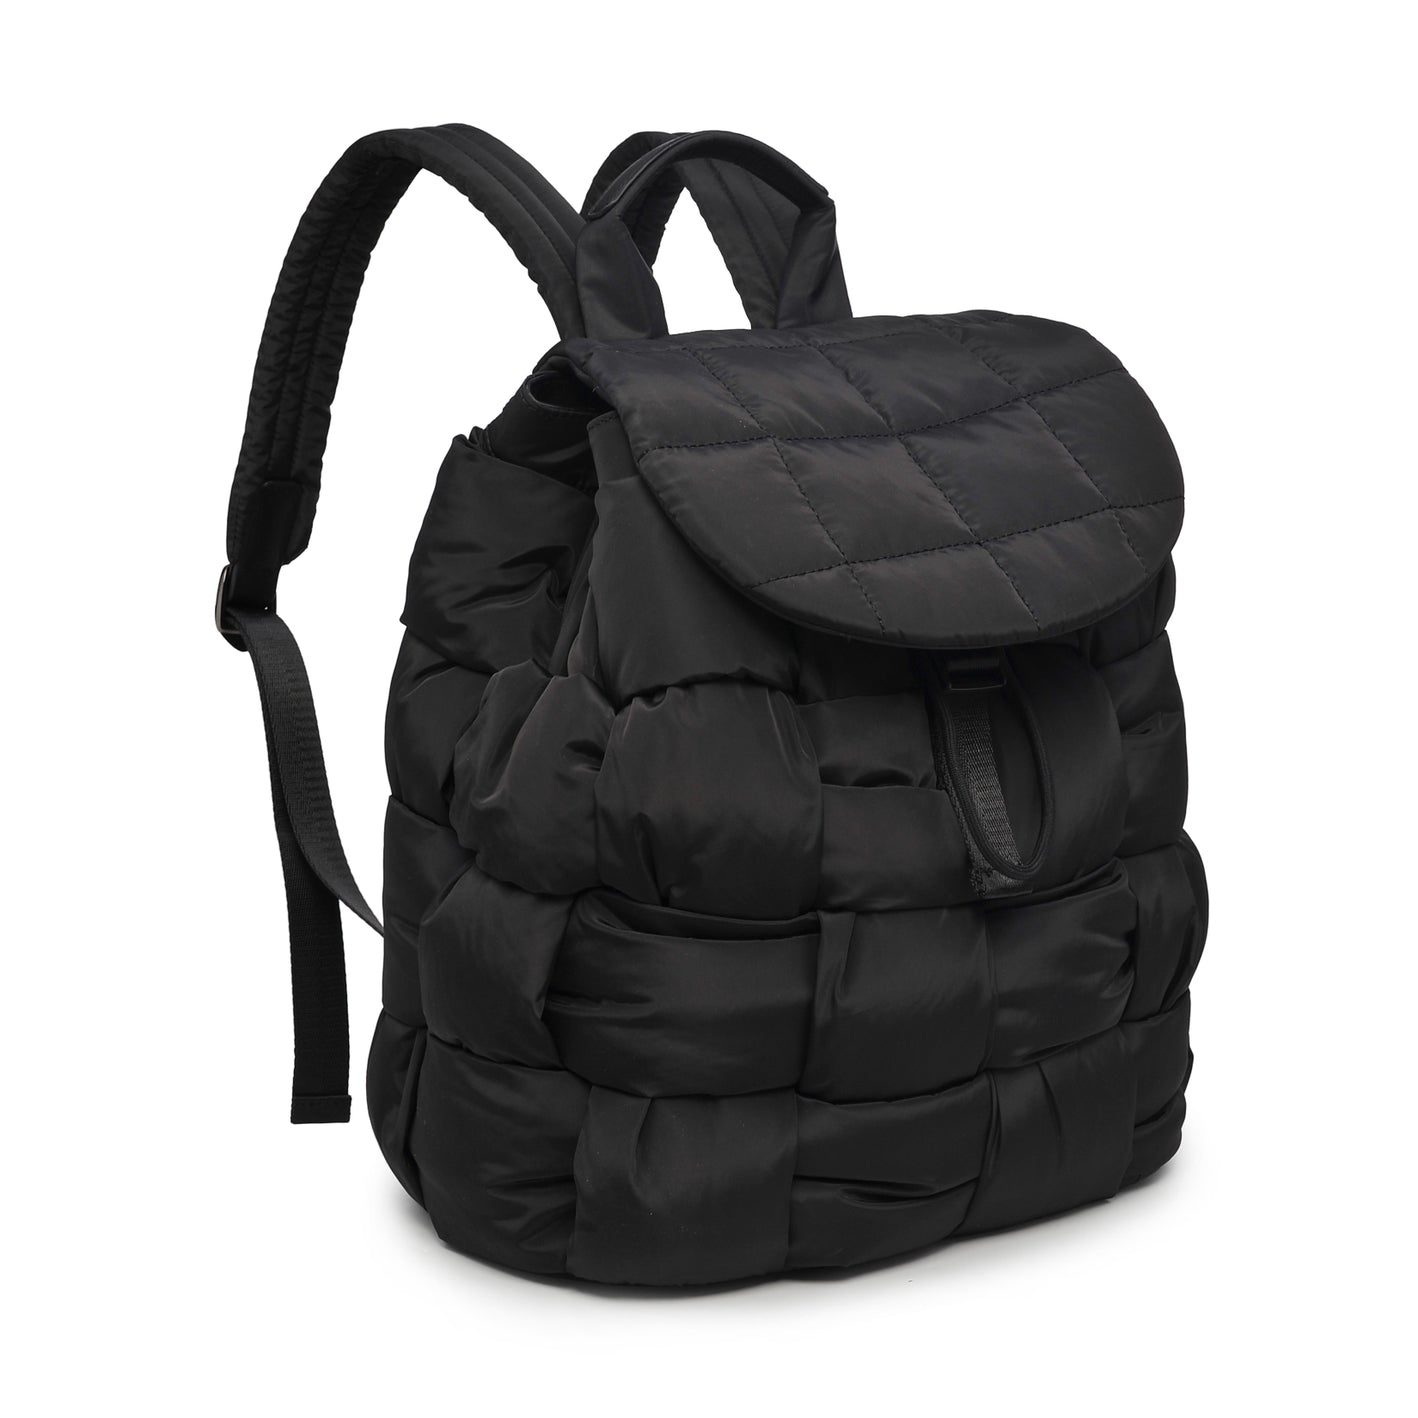 Perception Woven Nylon Backpack